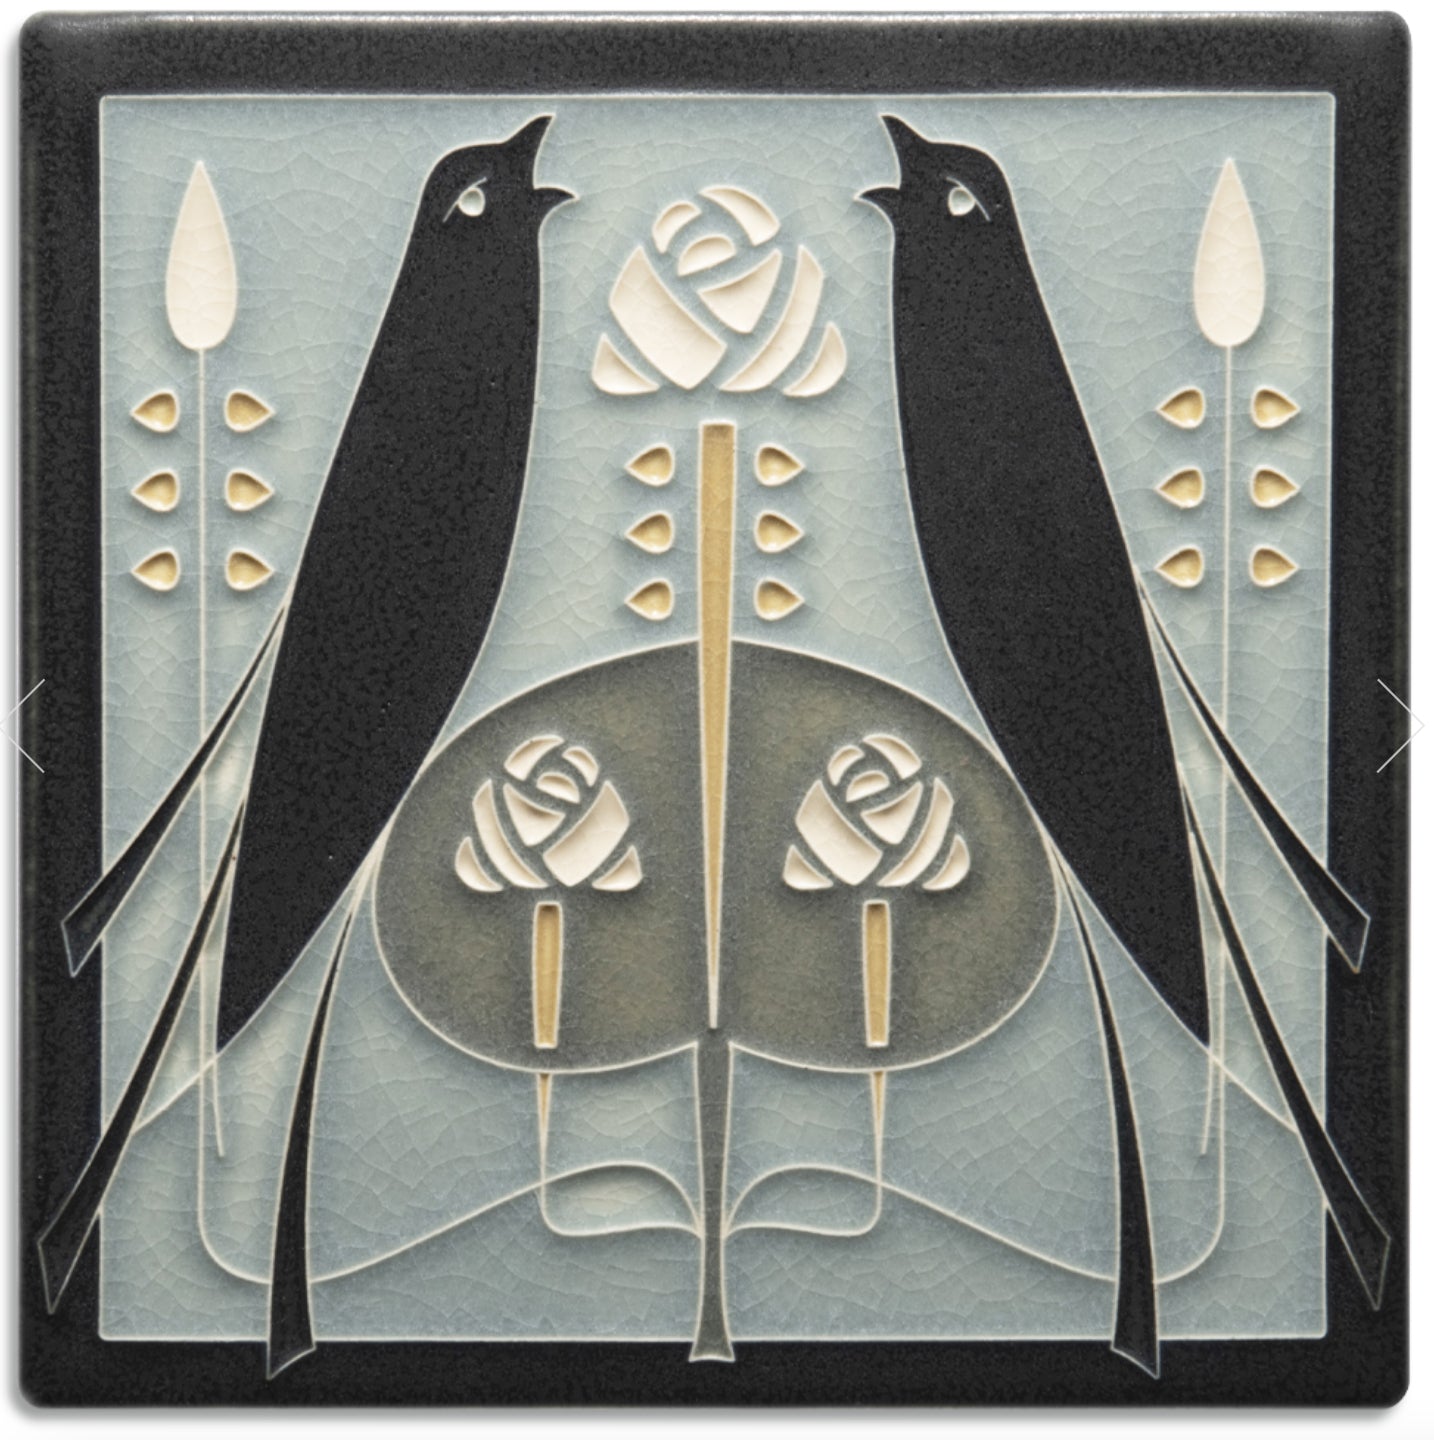 Songbird 8x8 art tile by Motawi.  Handmade in Michigan.